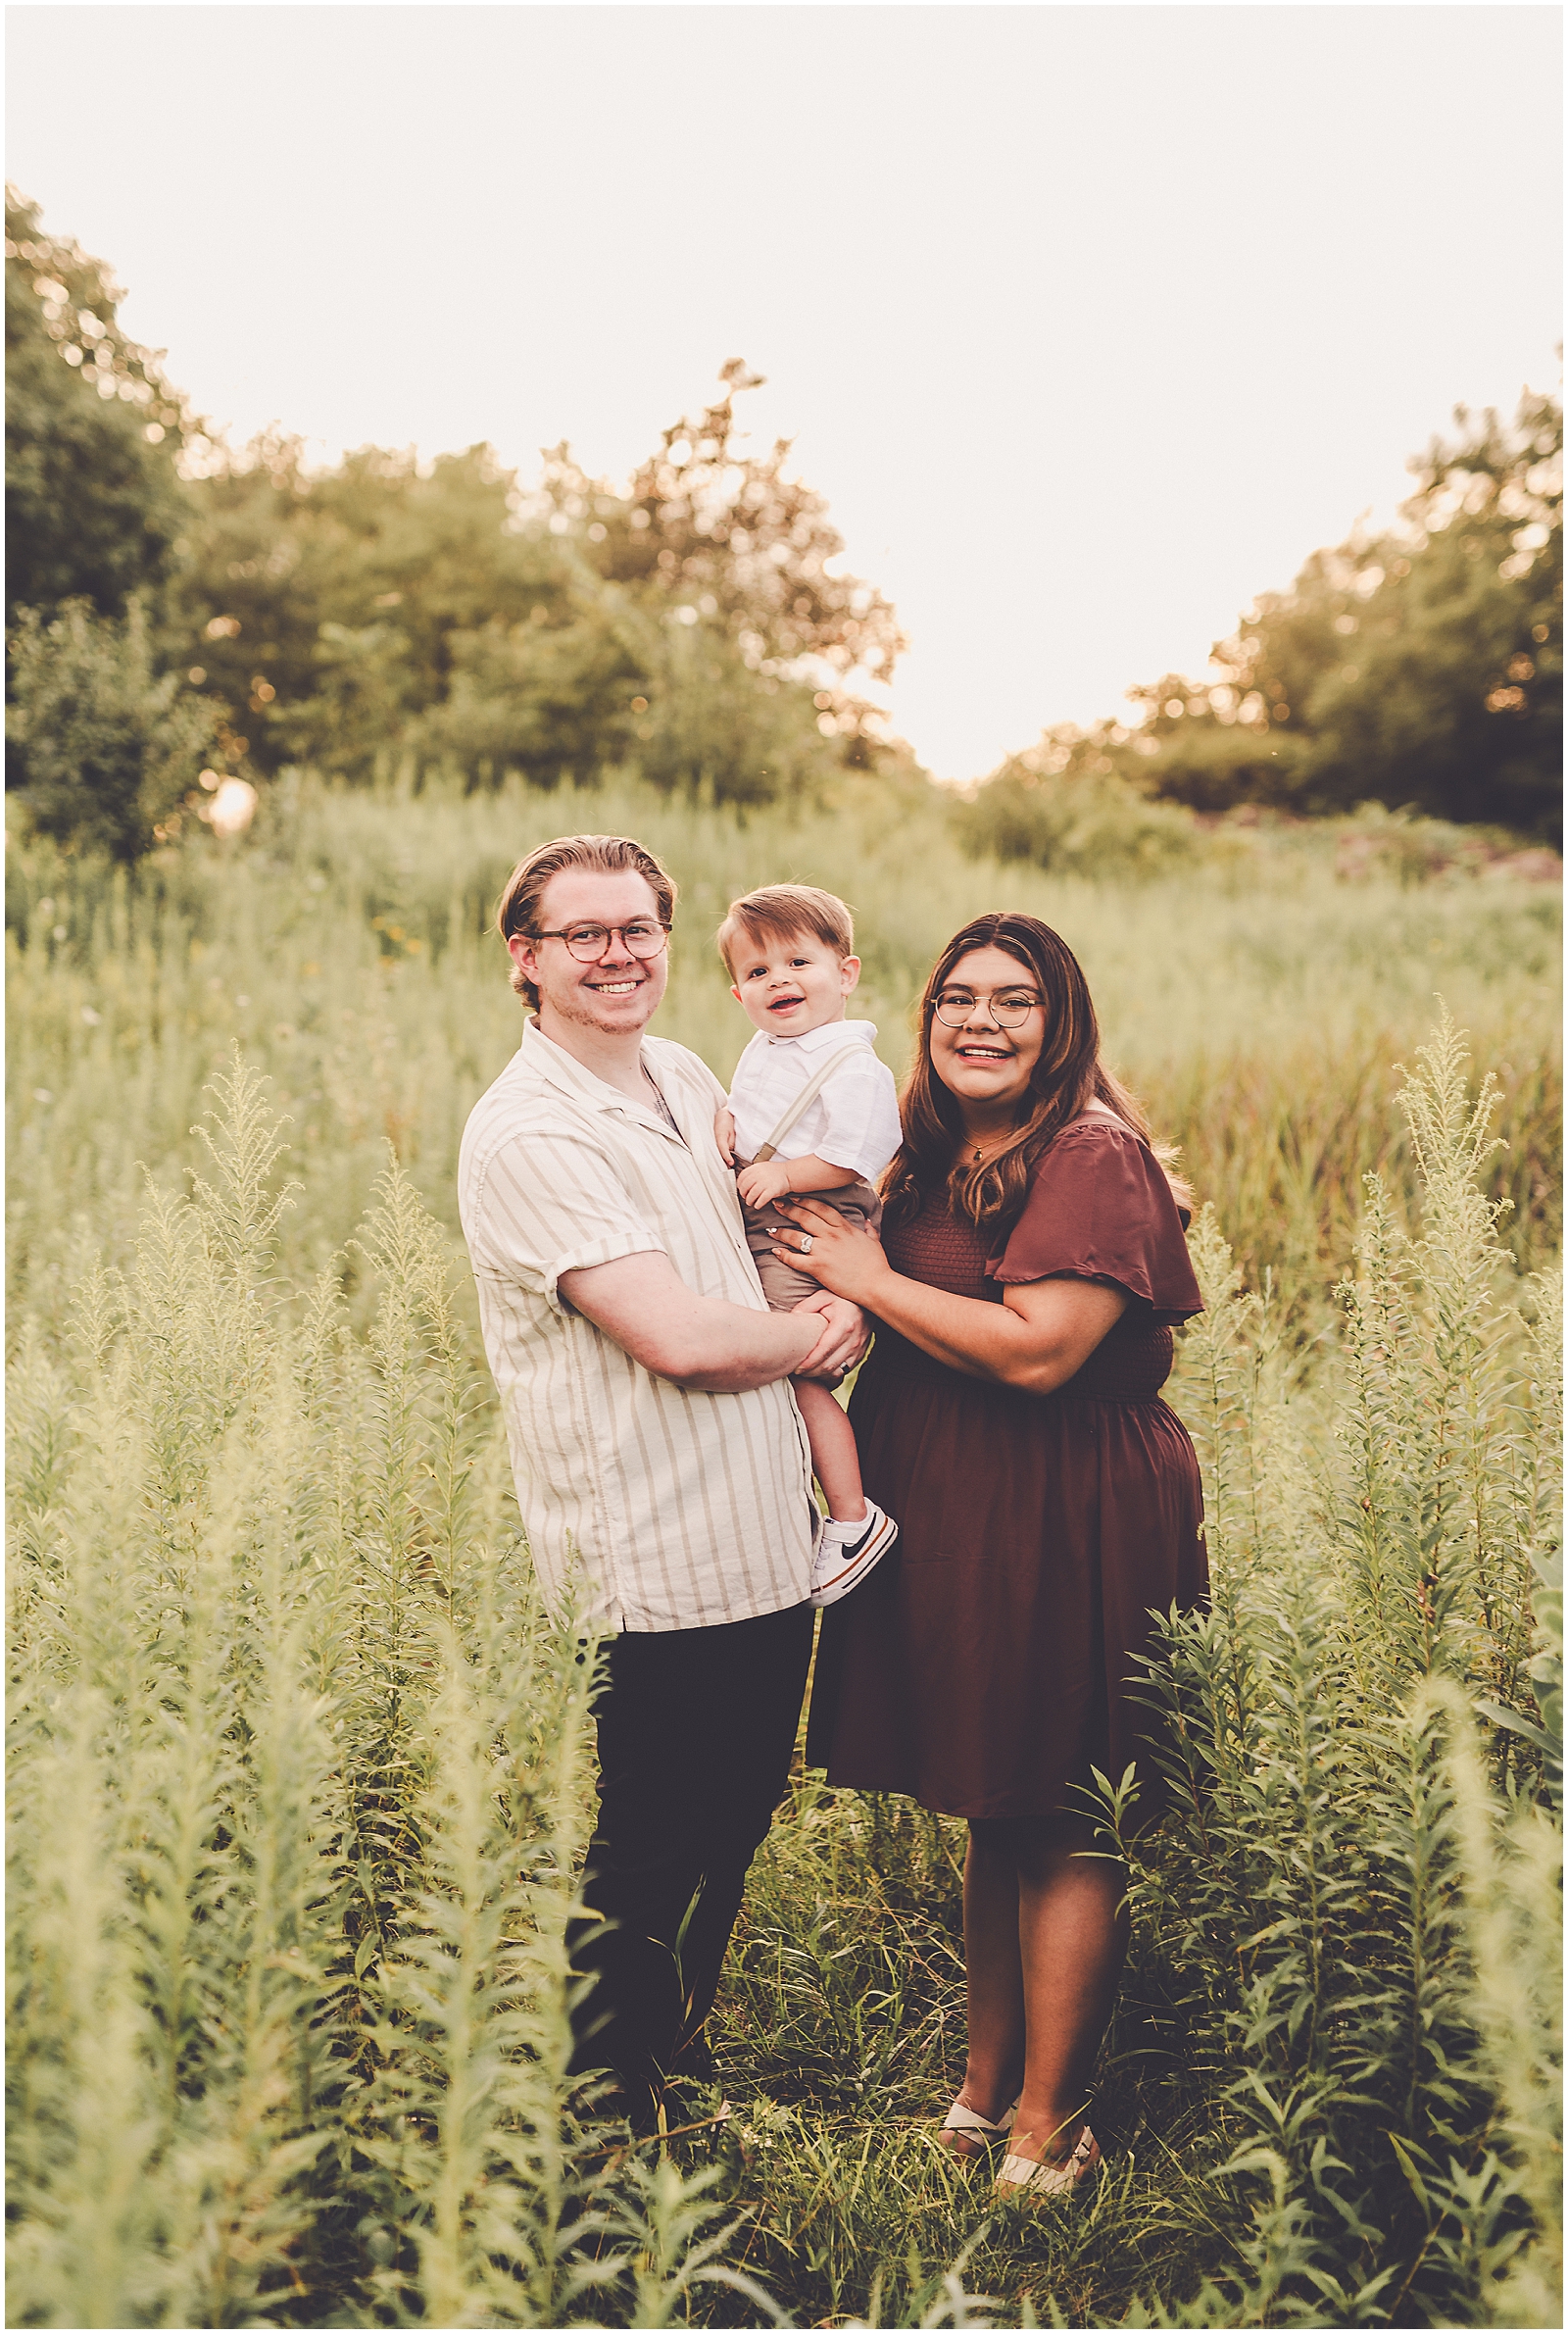 Summer sunset family session for the Robinson family with Bourbonnais & Kankakee County family photographer Kara Evans Photographer.